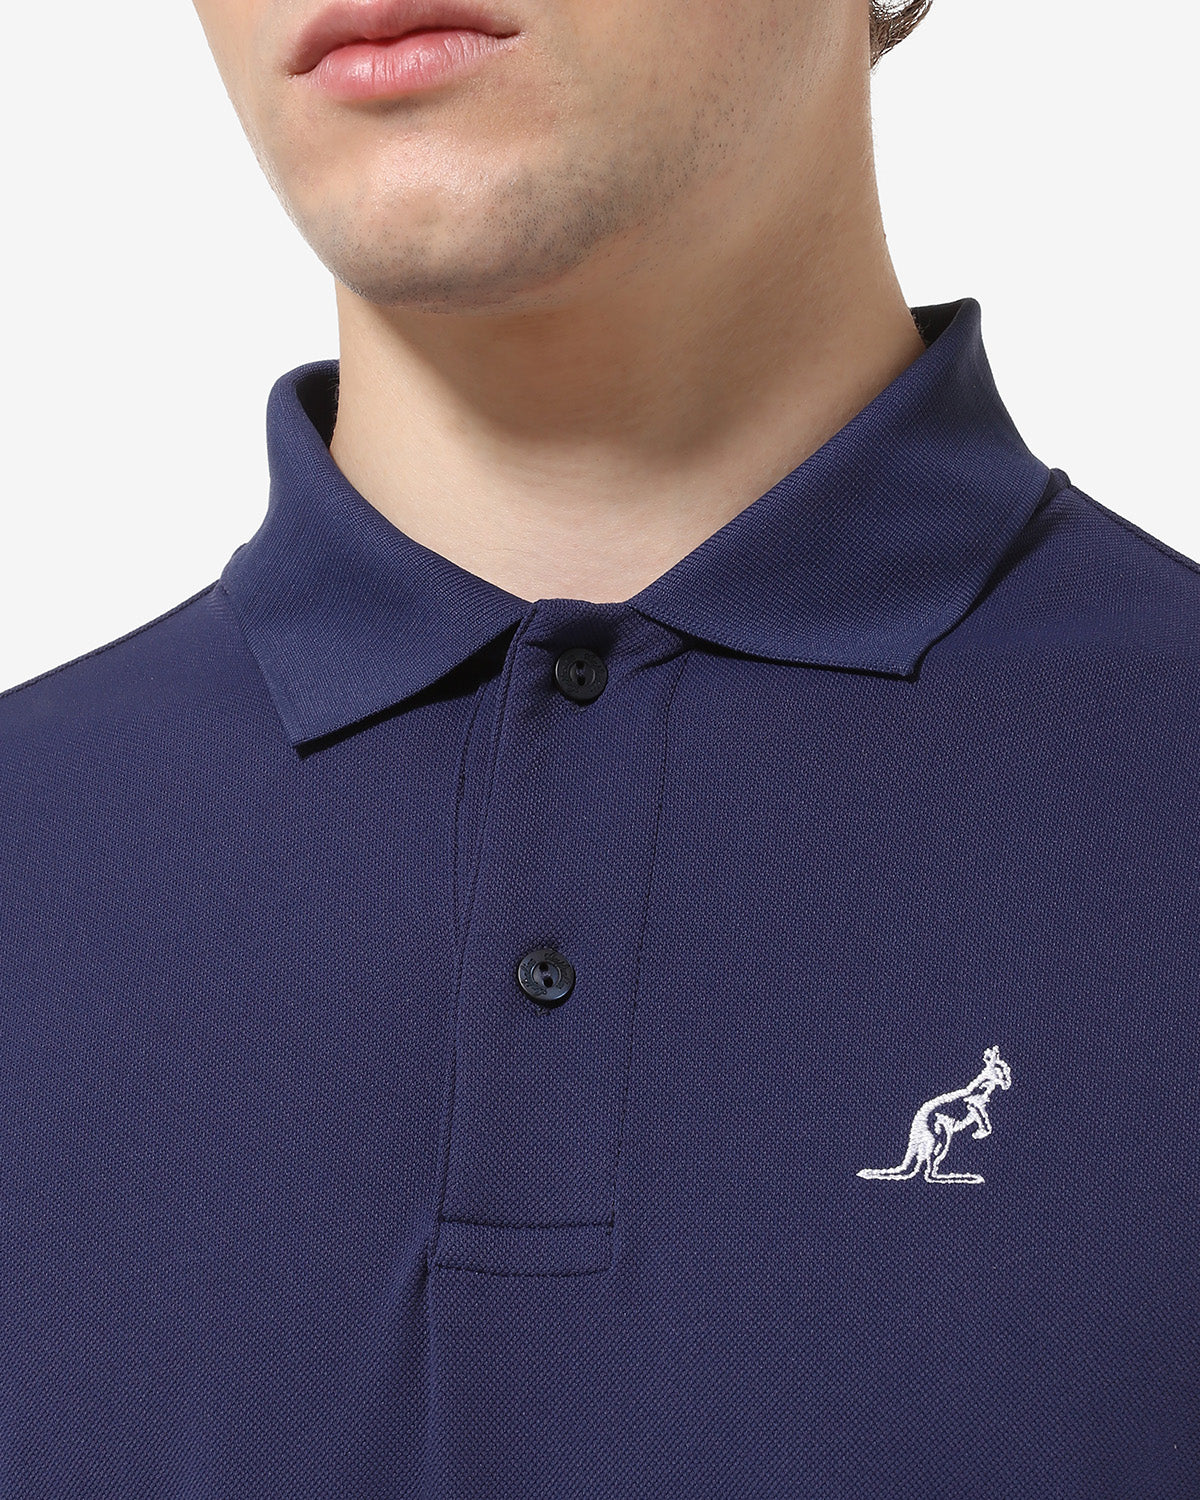 Icon Polo Shirt: Australian Sportswear